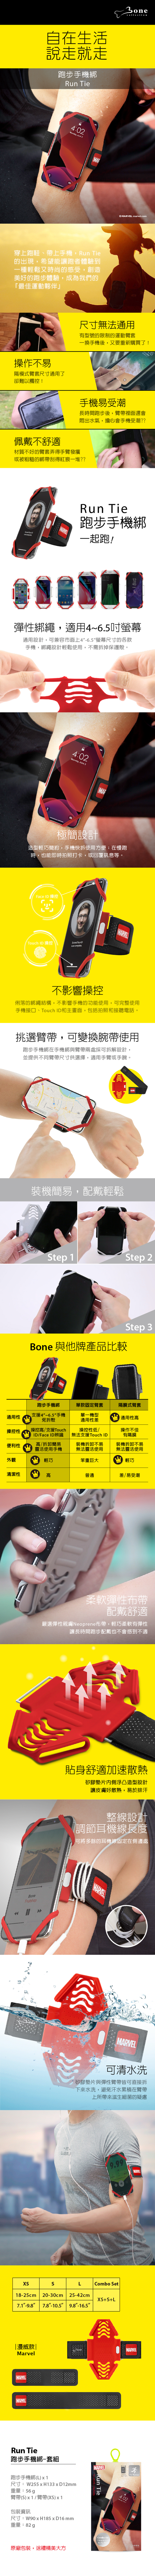 【Bone】跑步手機綁 - 全尺寸套組 - 漫威款